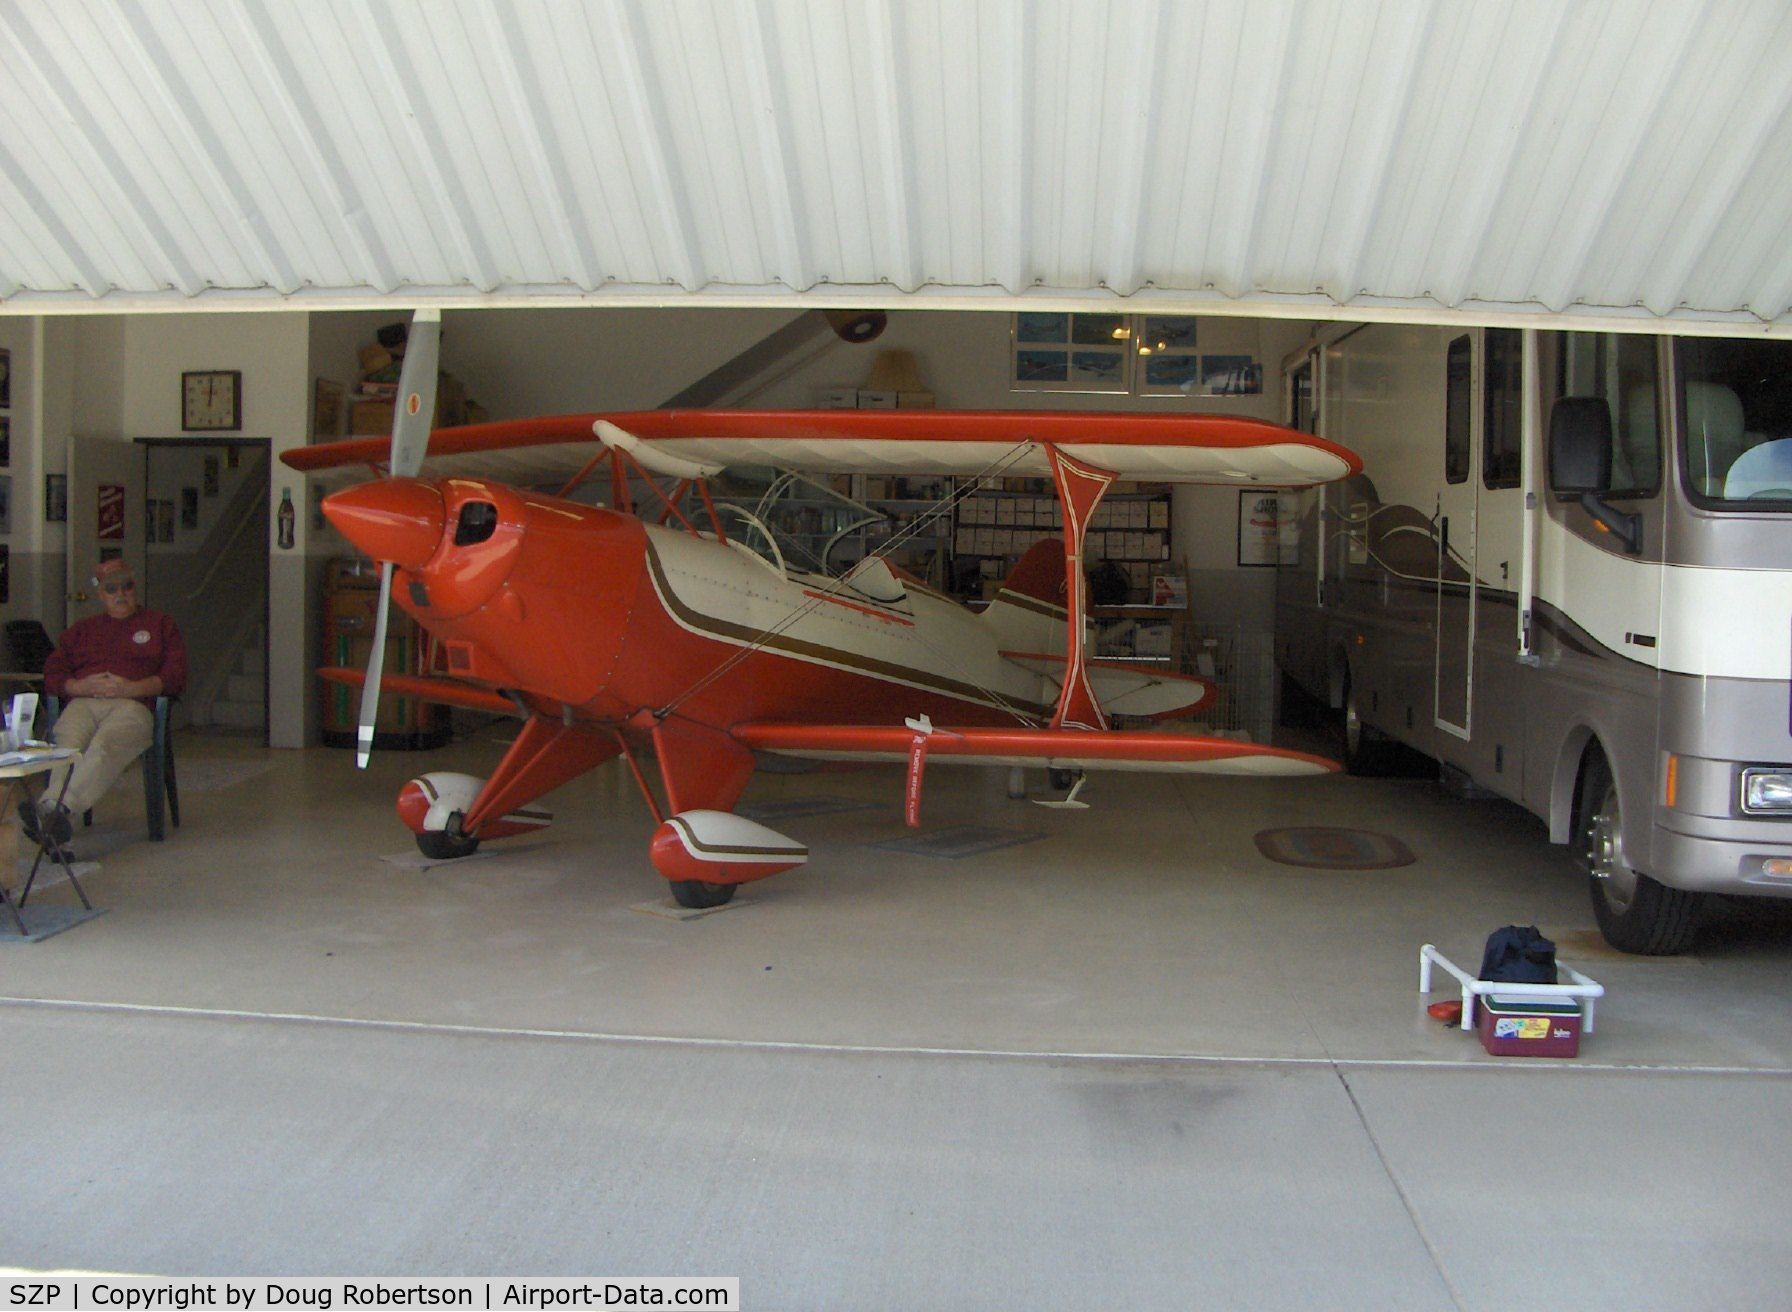 Santa Paula Airport (SZP) - Aviation Museum of Santa Paula, Hangar 5, The Donalson hangar with PITTS S-2A